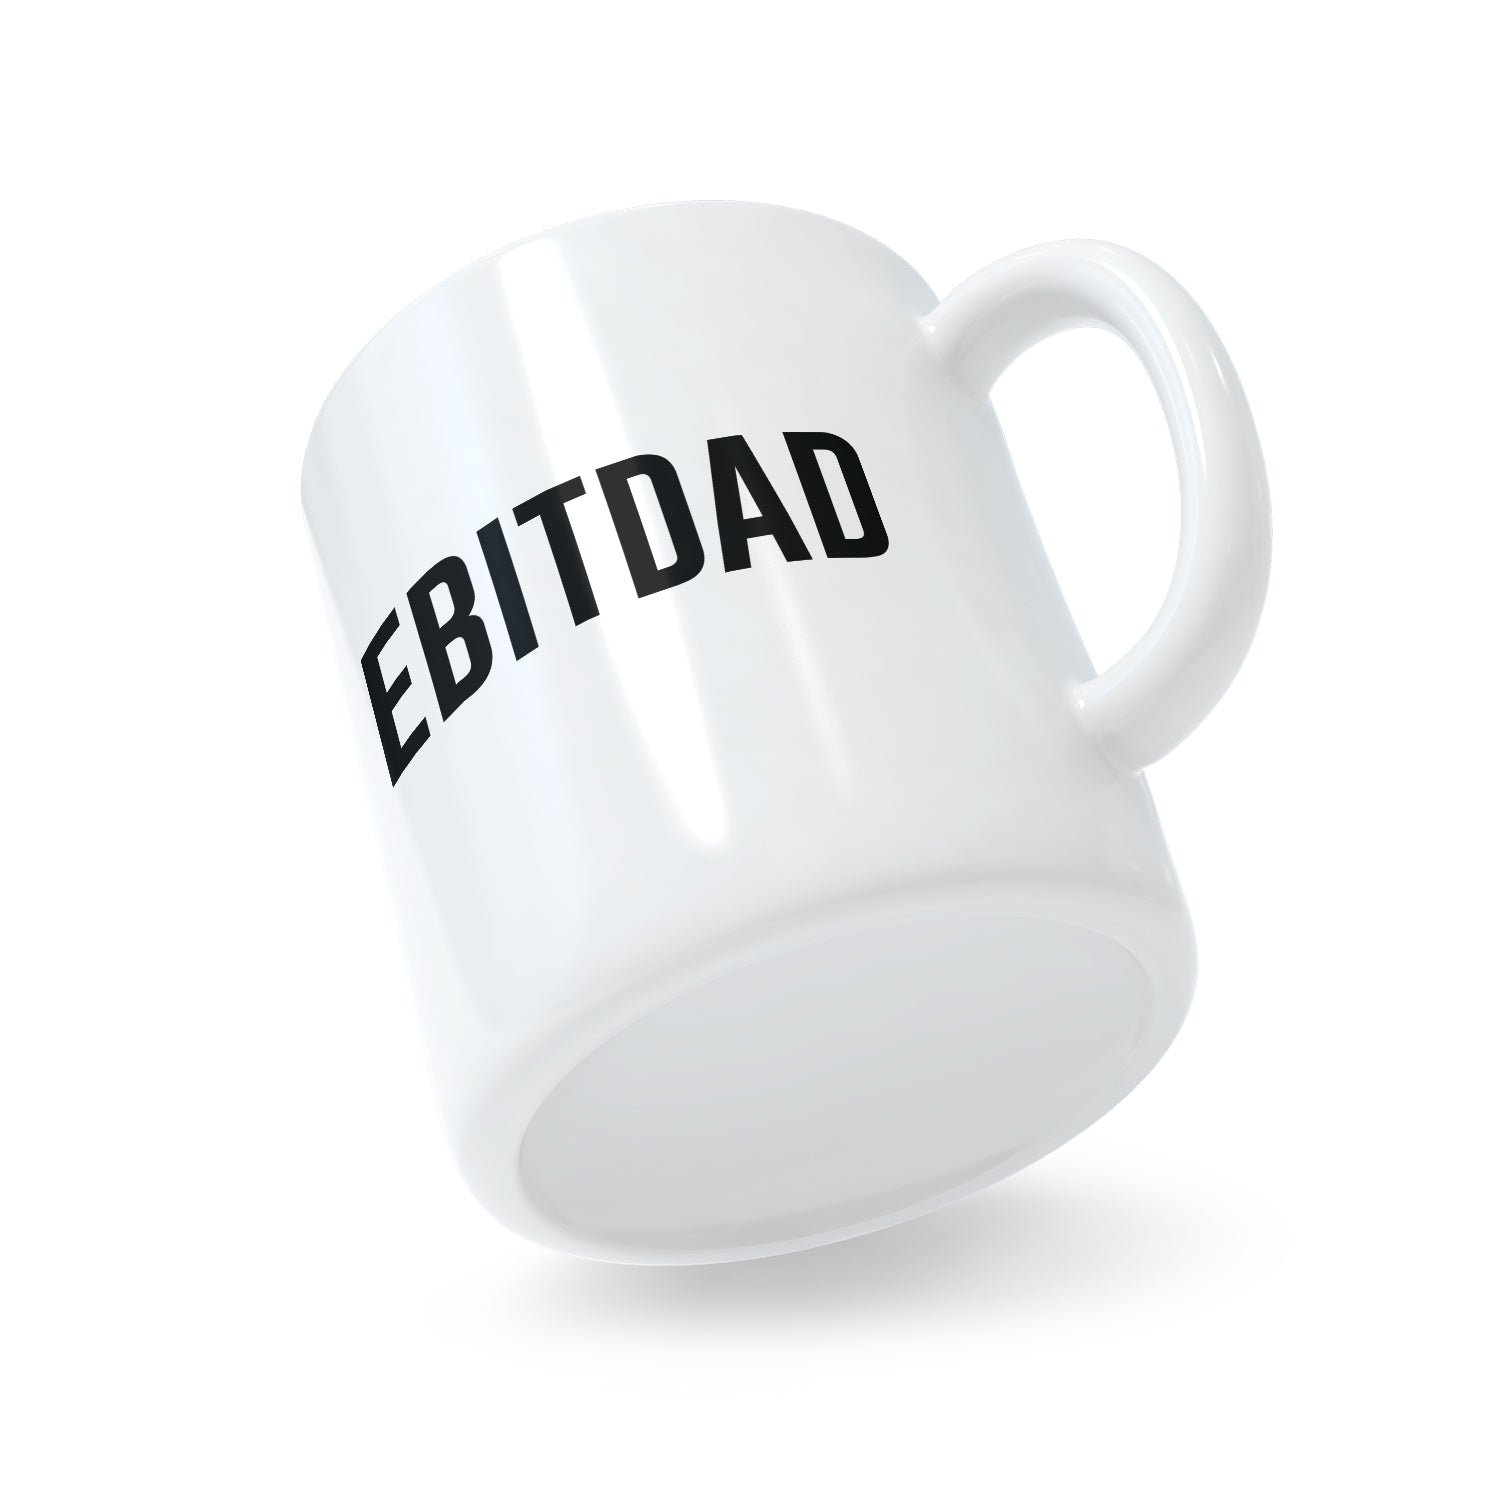 EBITDAD Mug